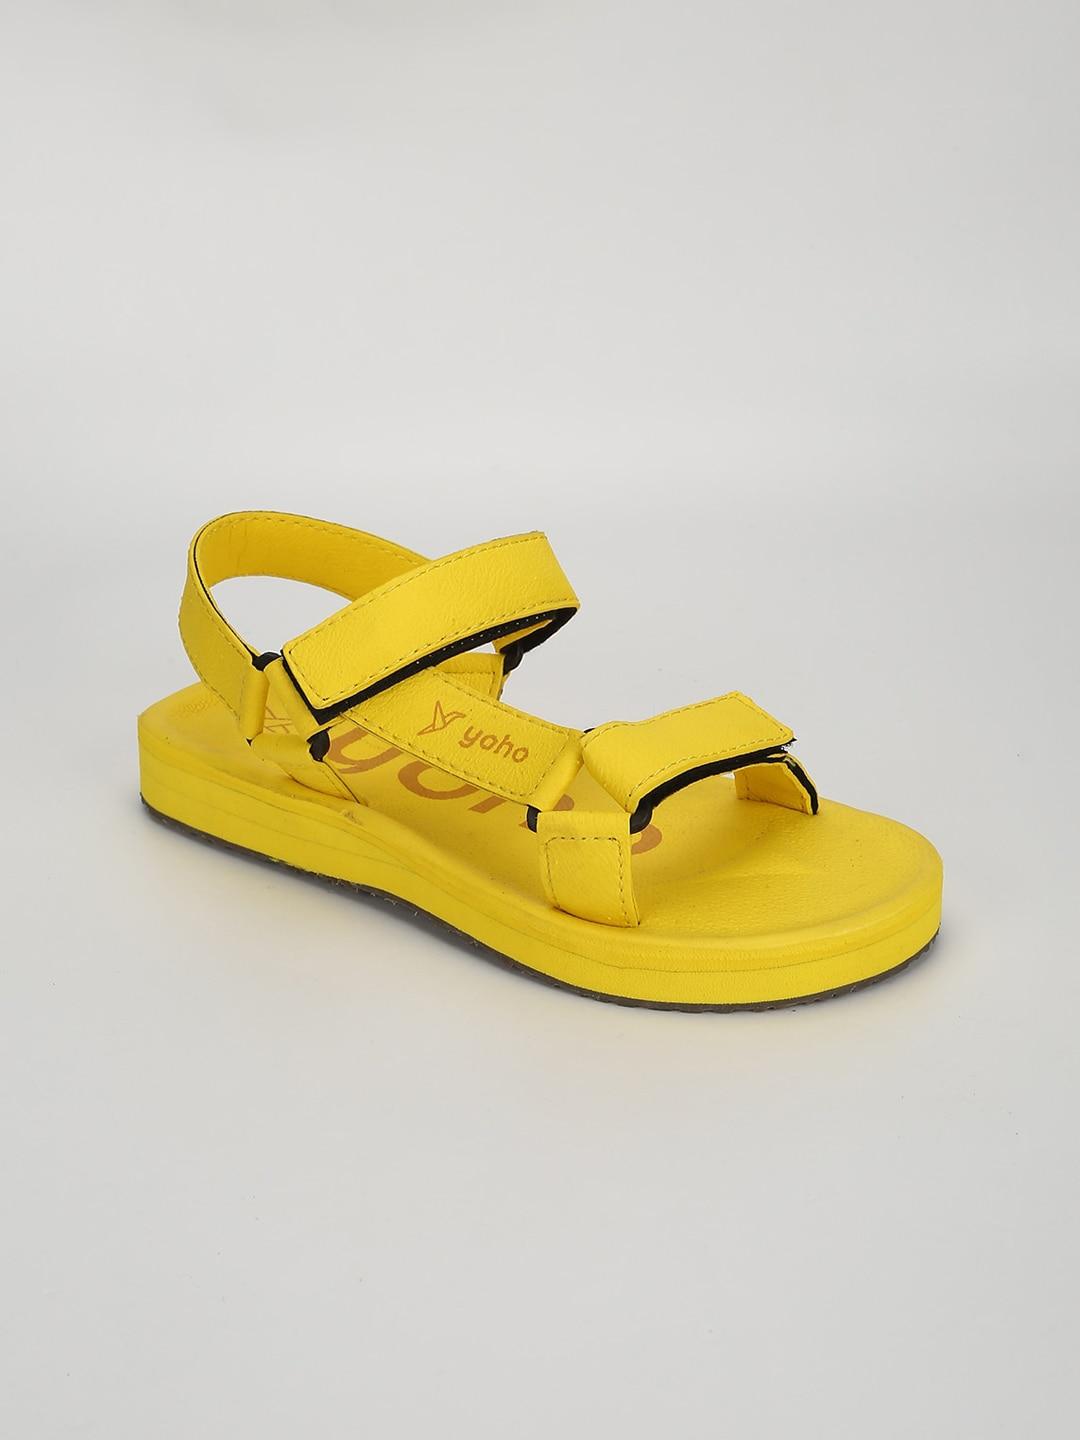 yoho-women-strappy-velcro-sports-sandals